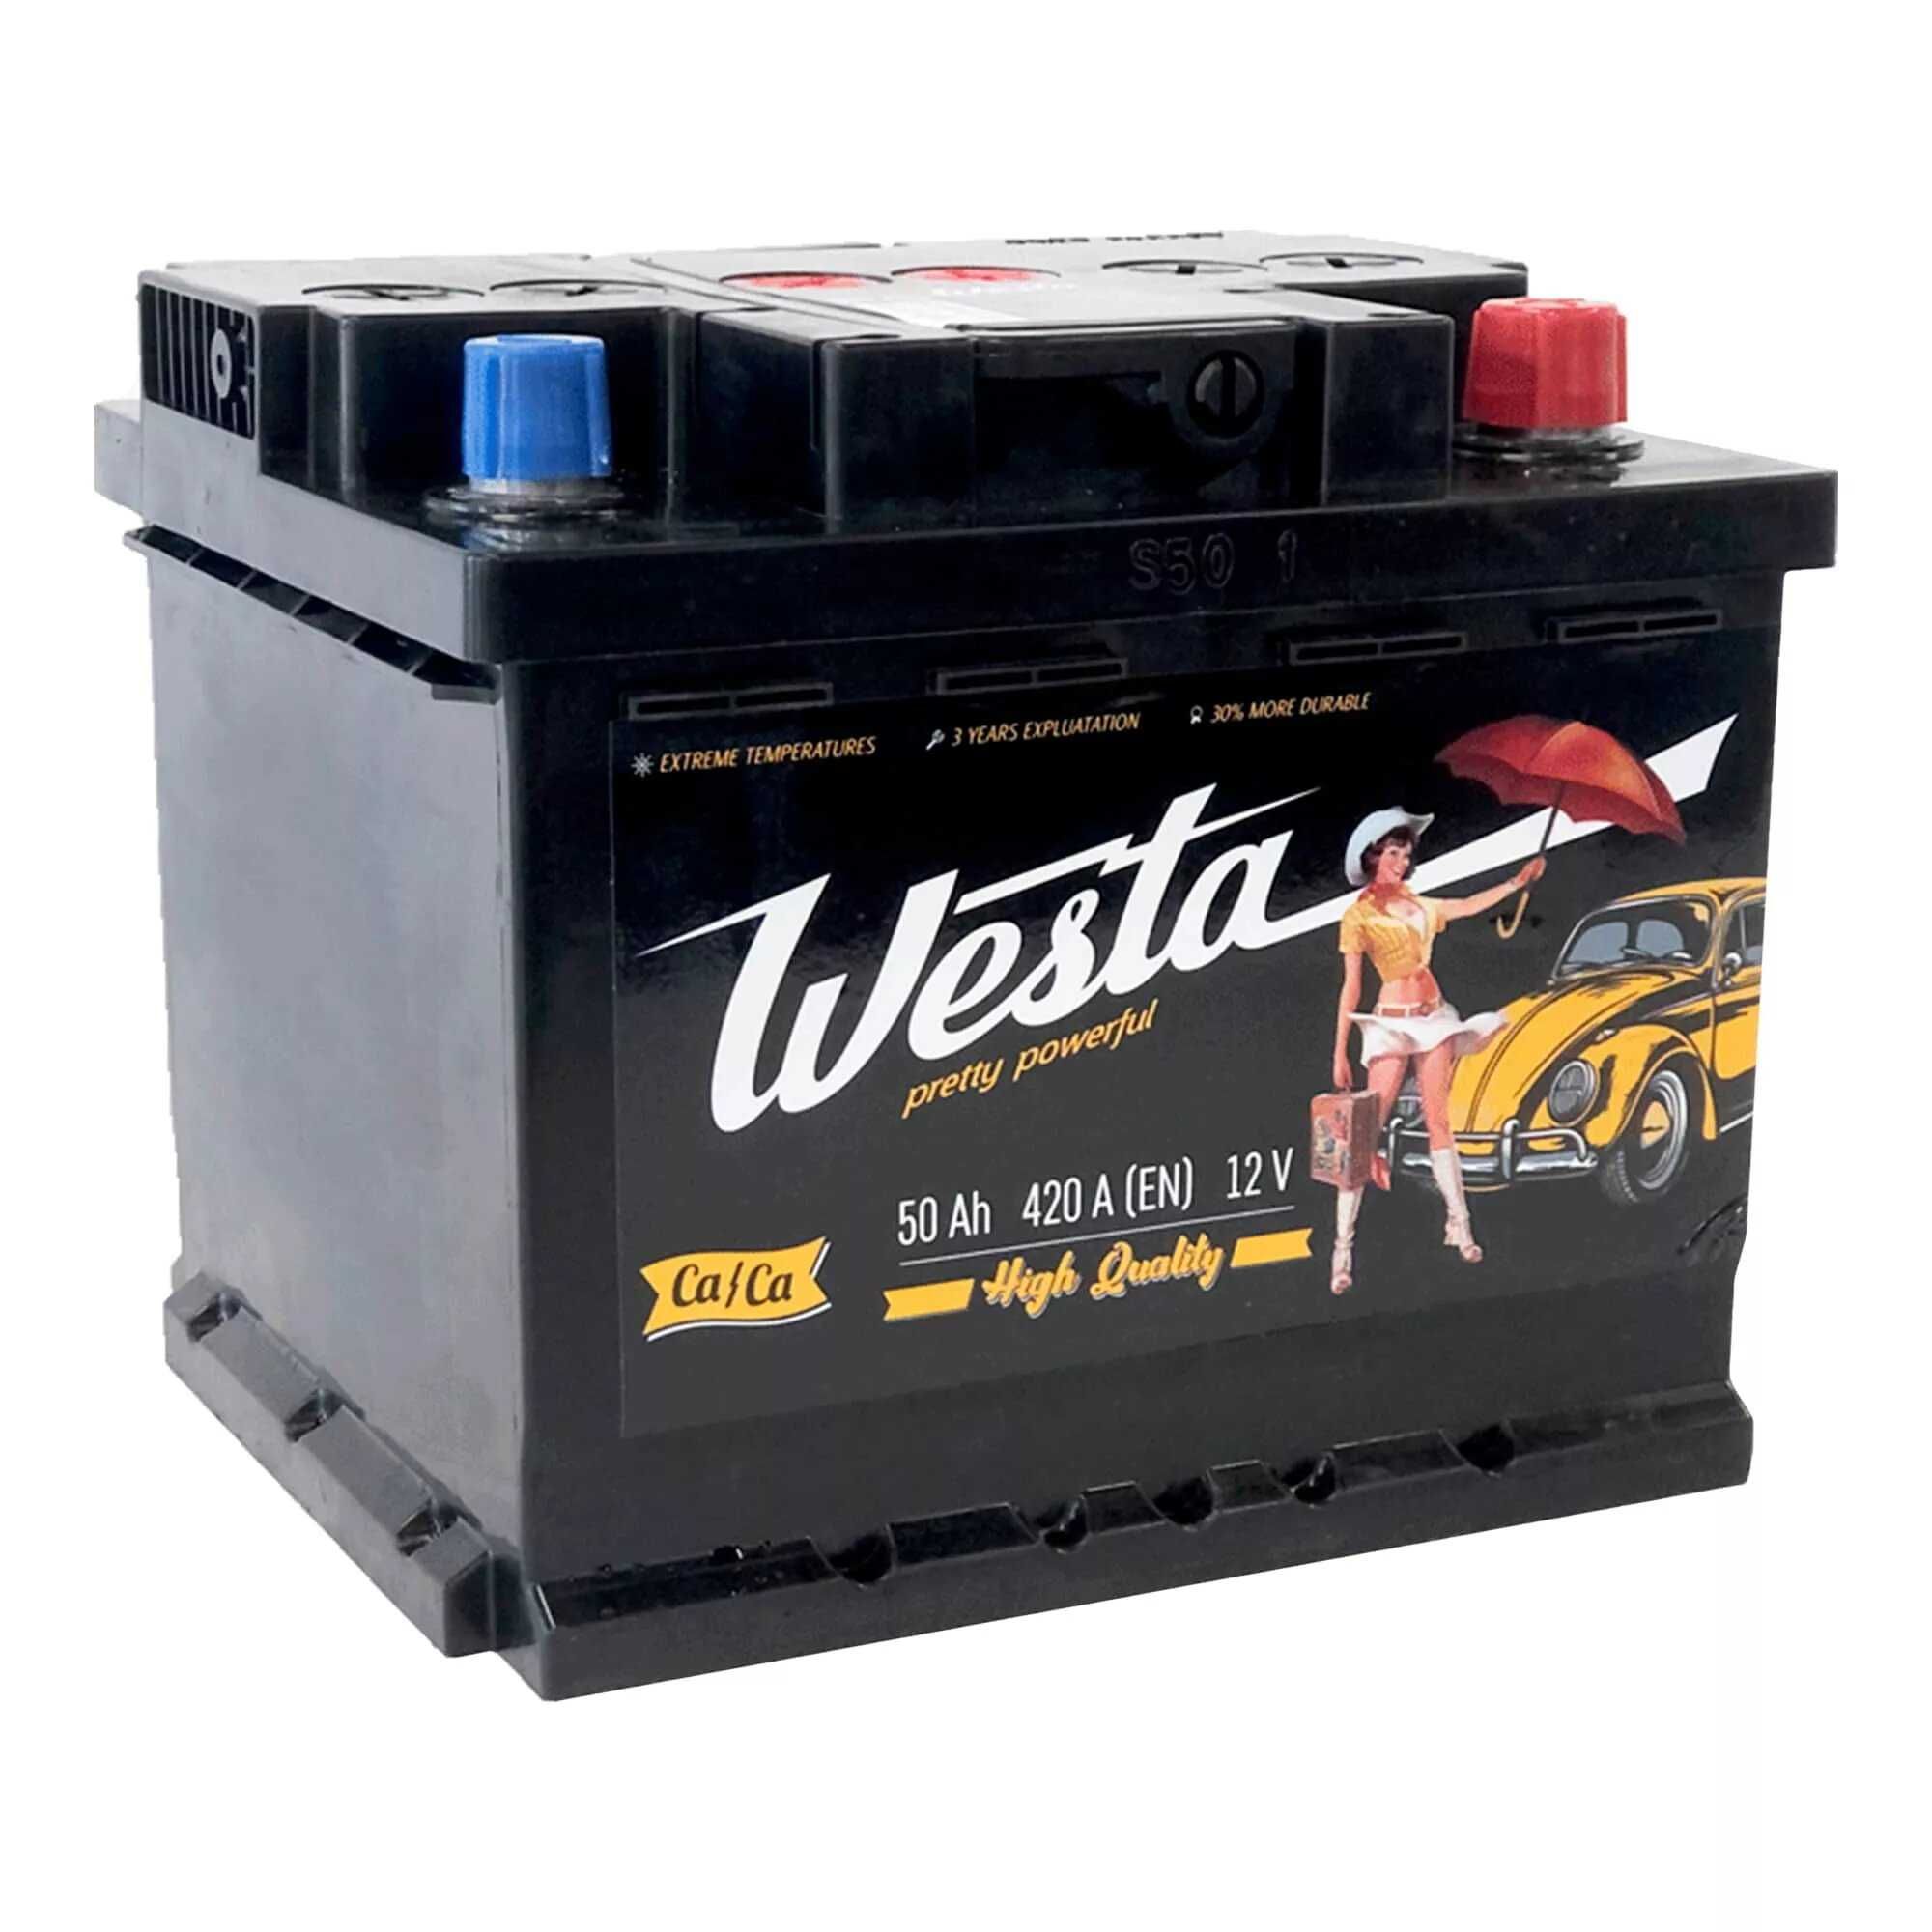 Westa Premium від 50Ah-100Ah акумулятор